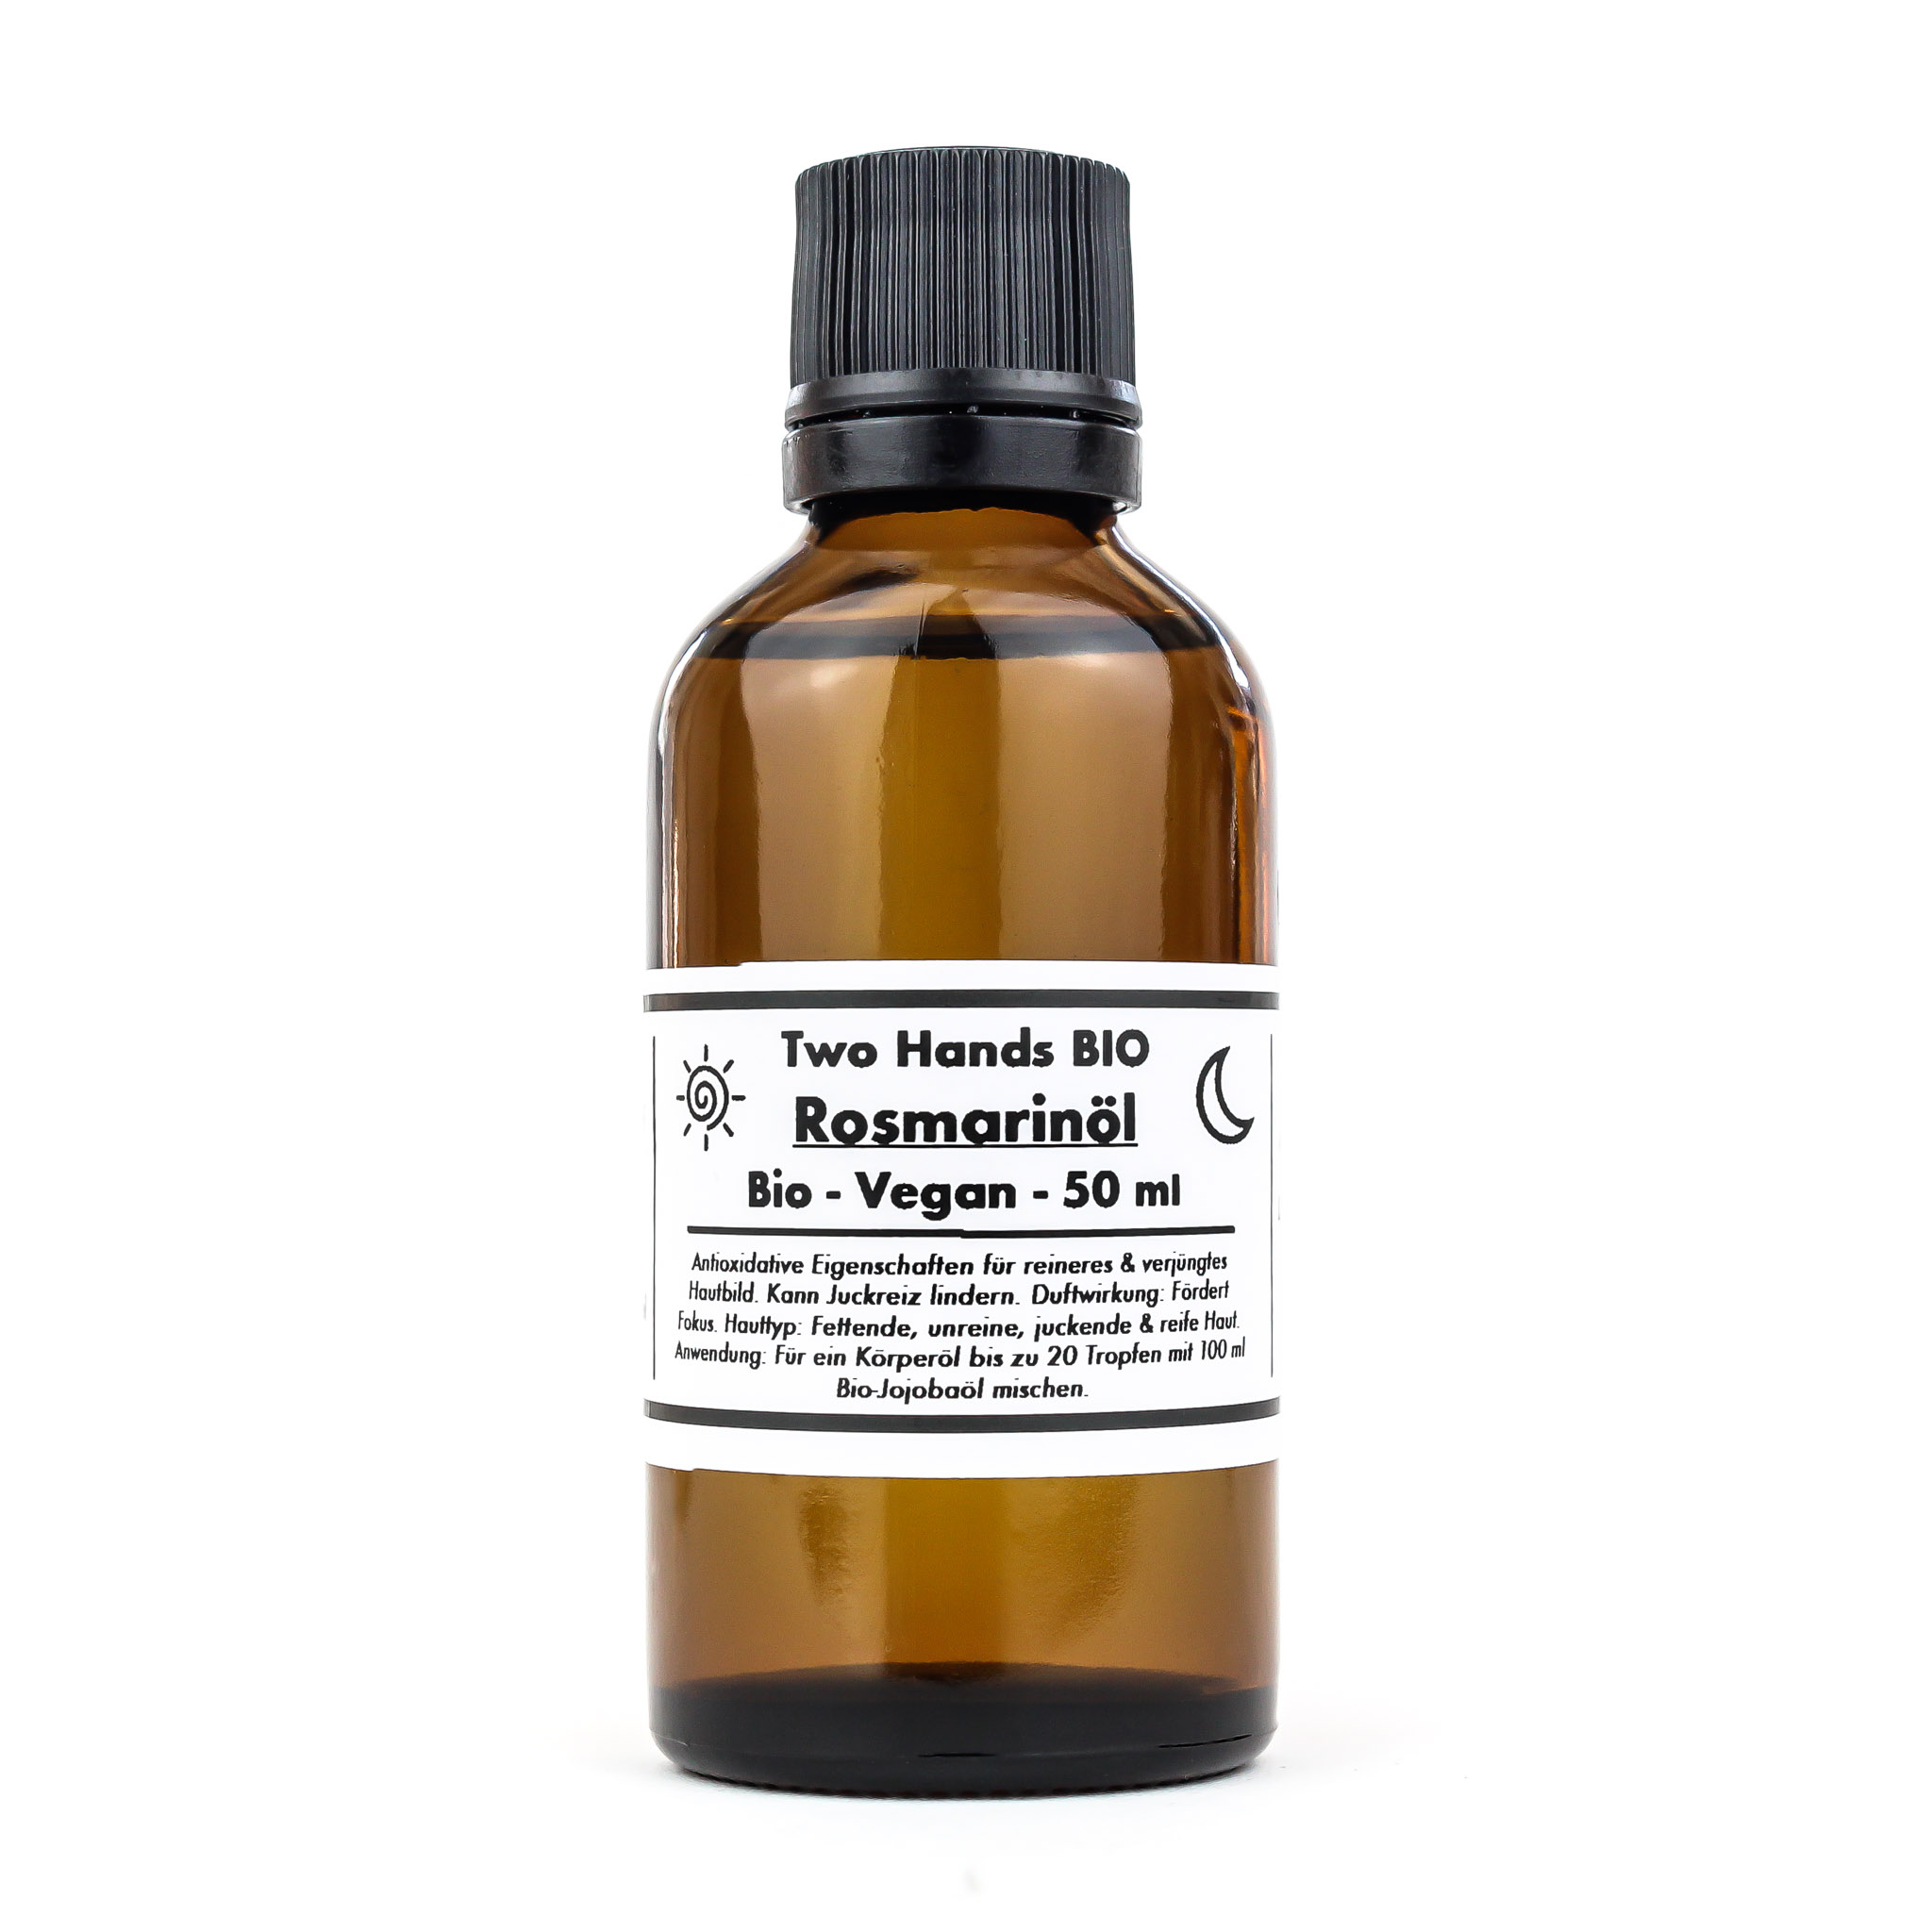 Rosmarinöl - Bio - Vegan - 50 ml